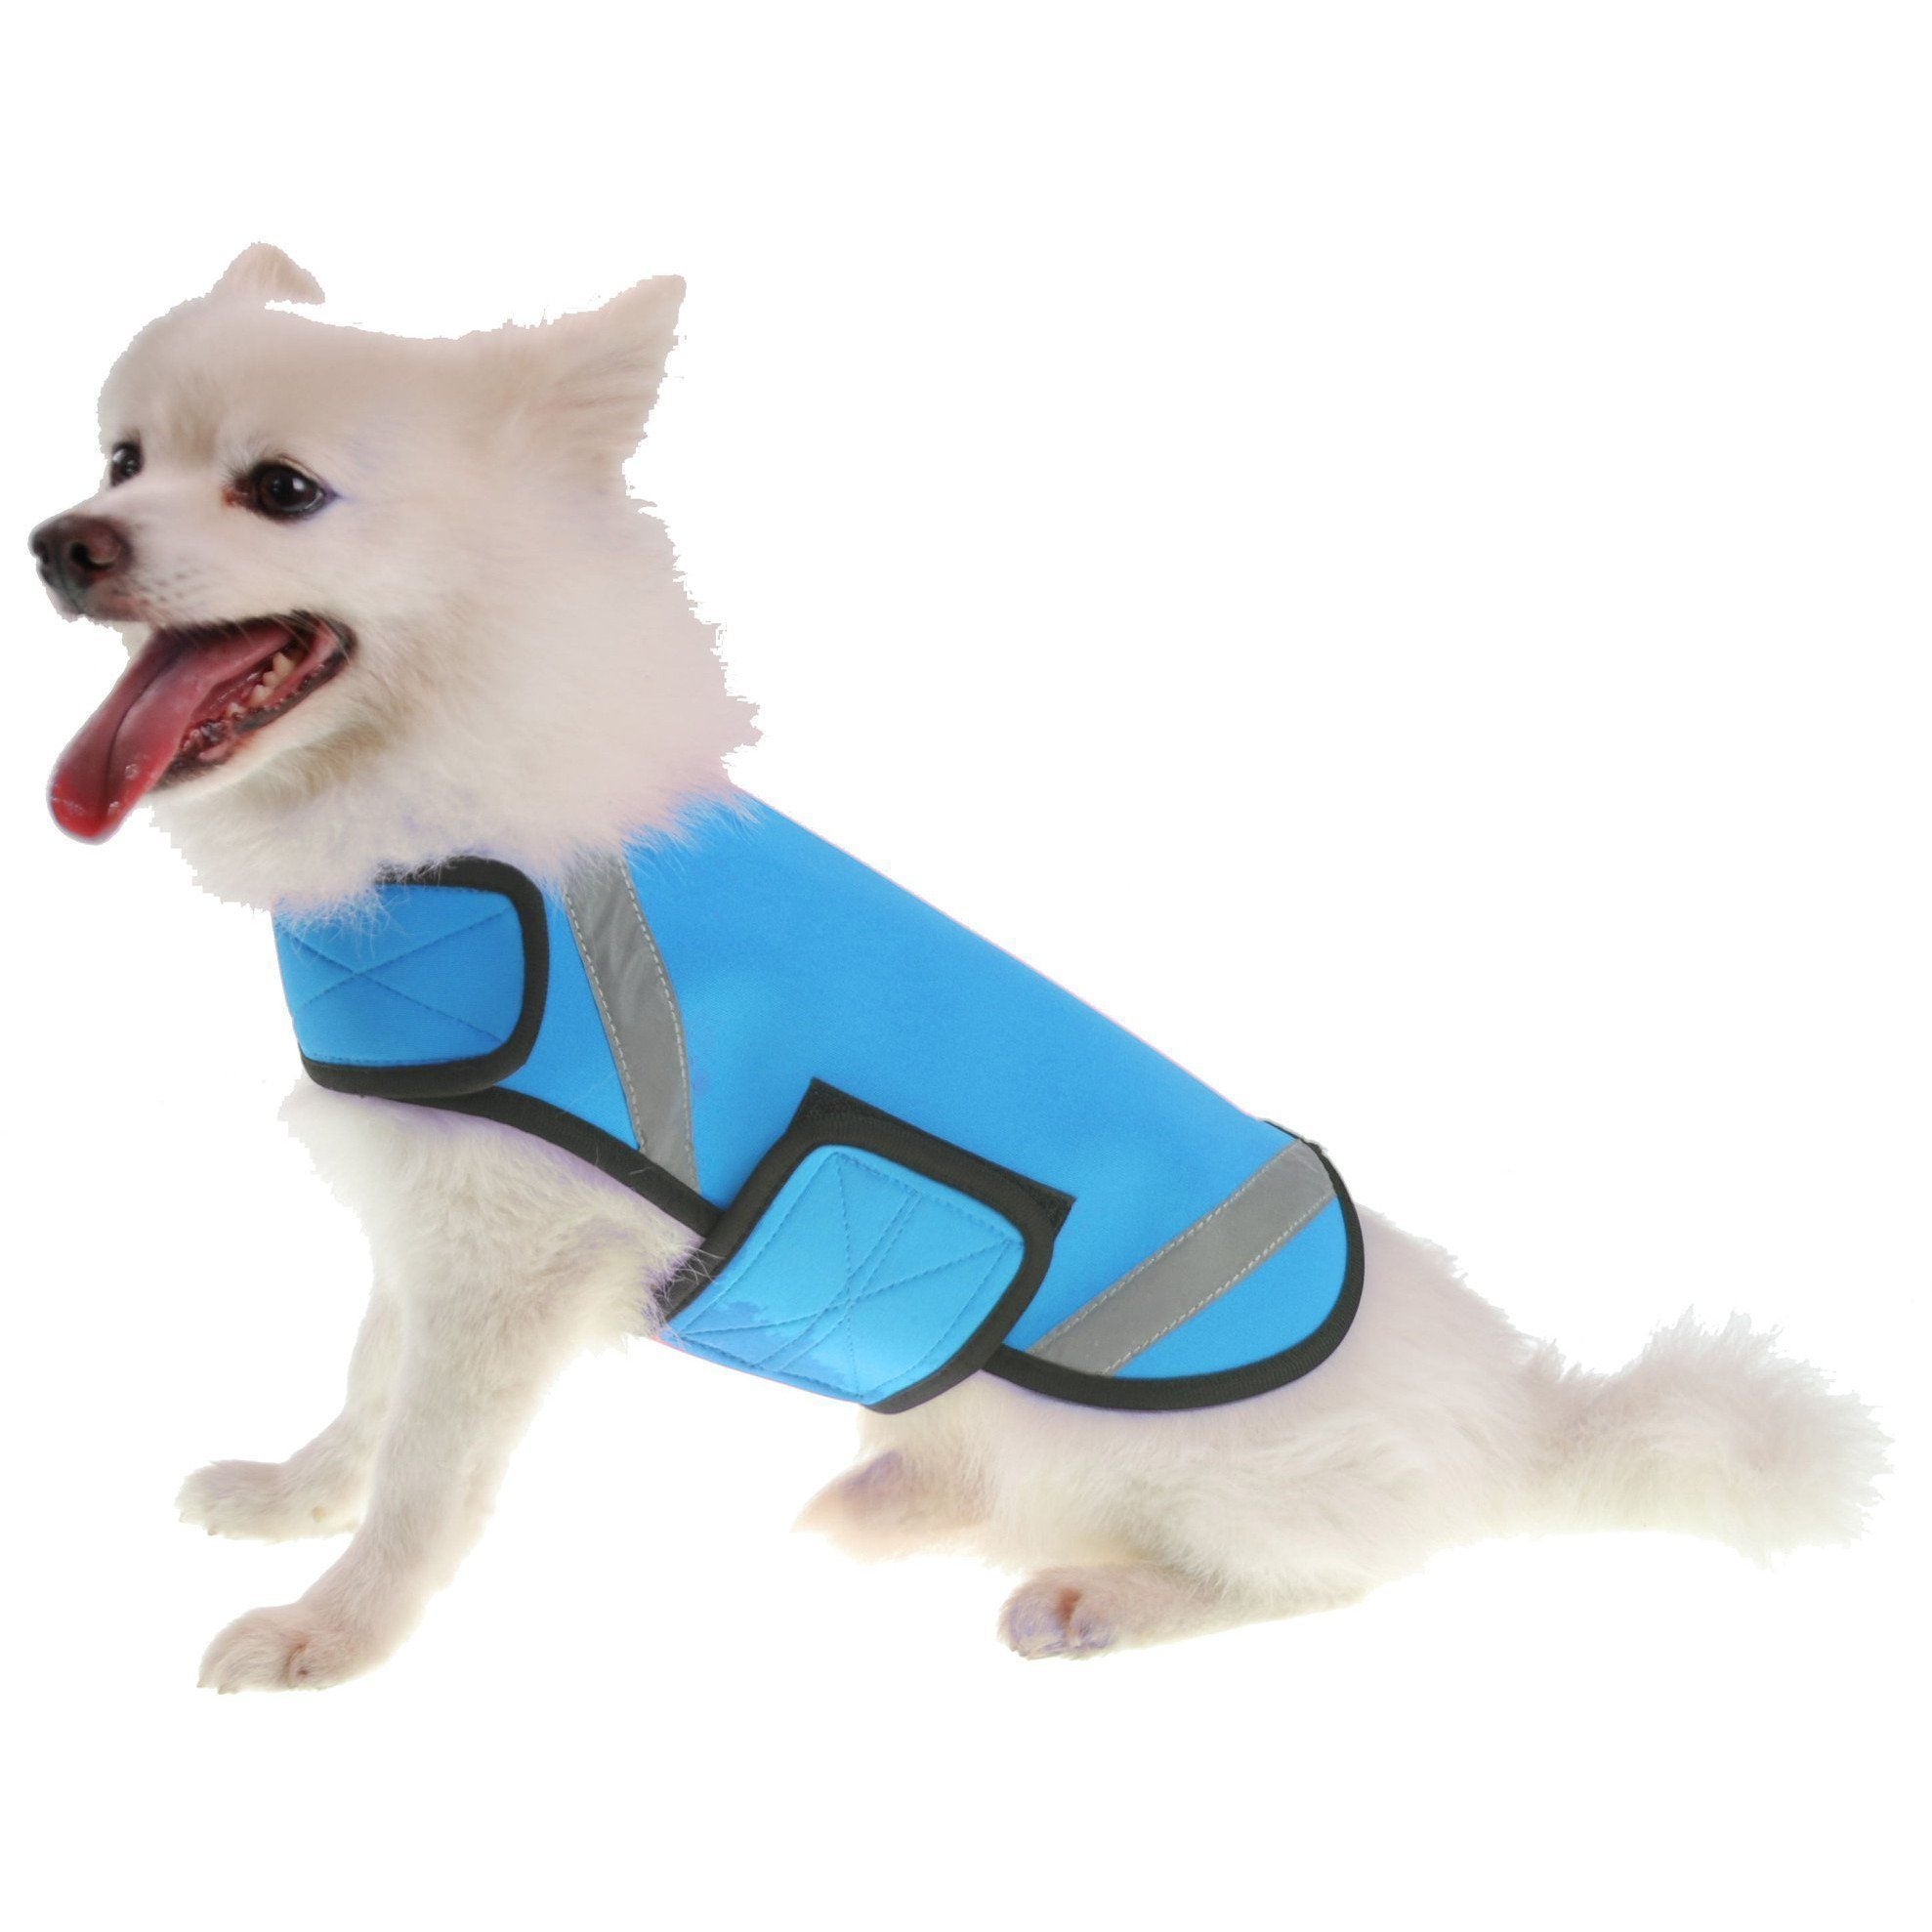 Pet Life ® 'Extreme Neoprene' Multi-Purpose Protective and Reflective Rash Guard Dog Coat X-Small Blue